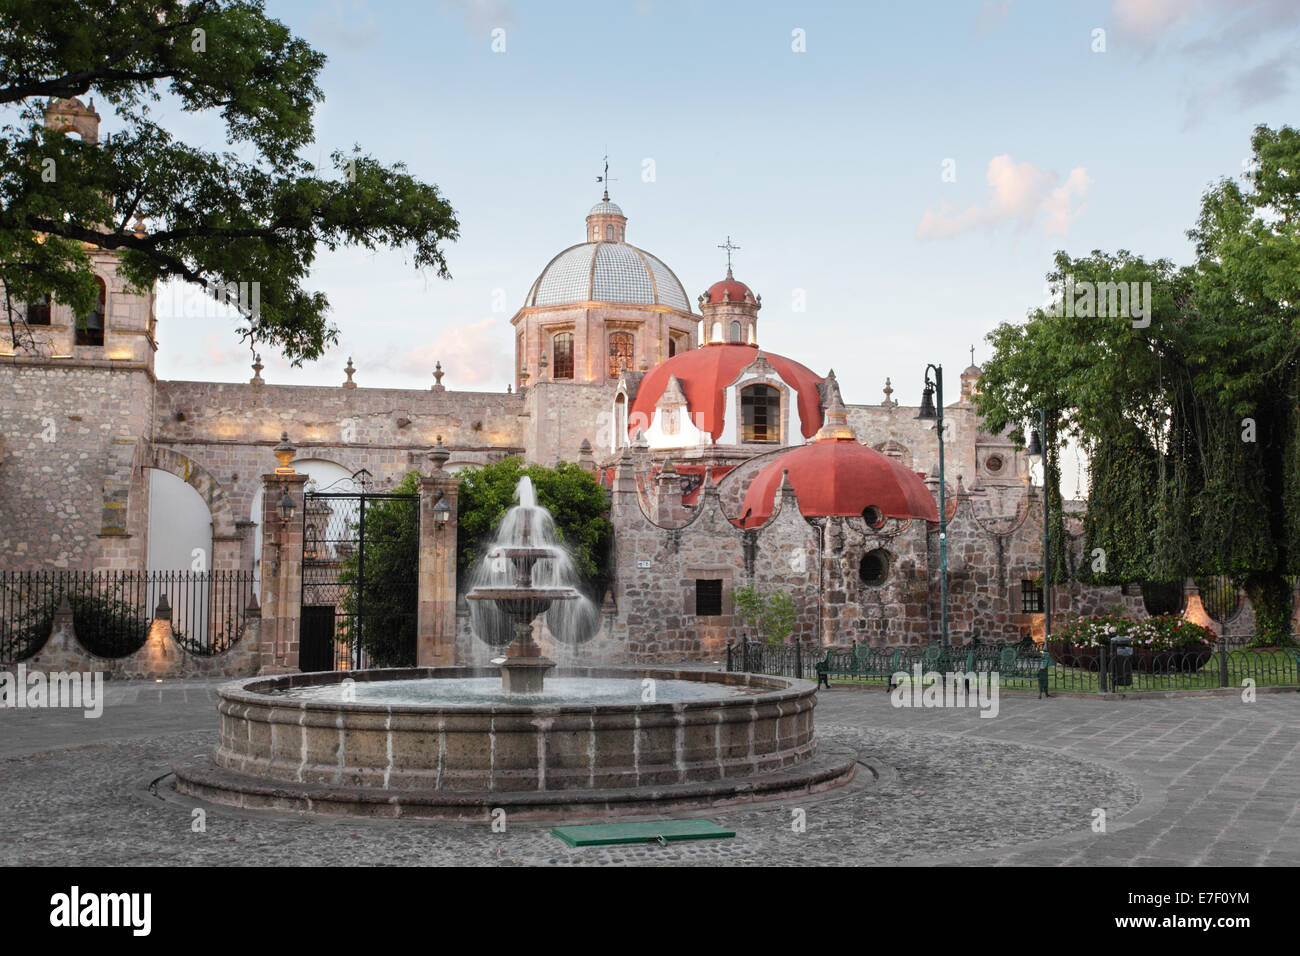 Plaza and red domes of El Carmen church, Morelia, Michoacan, Mexico. Stock Photo